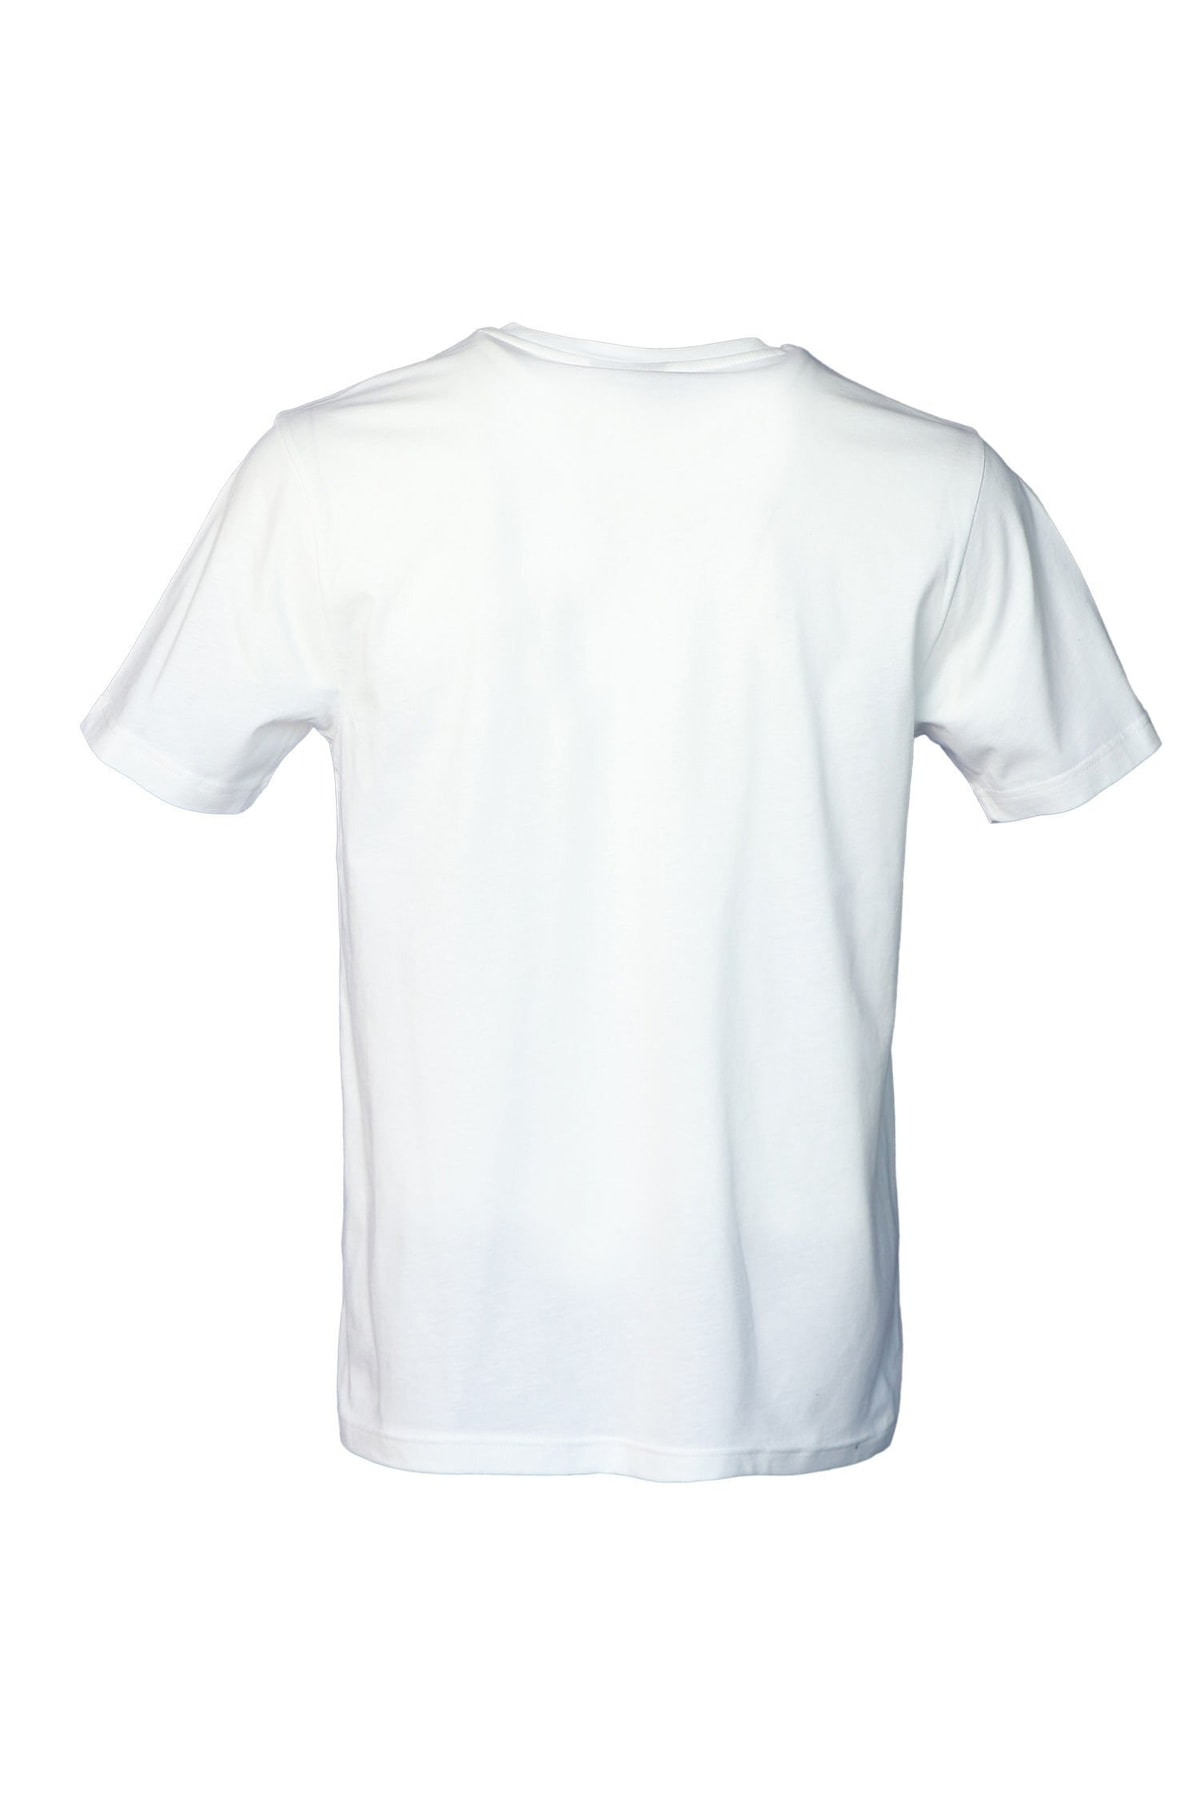 HUMMEL تی شرت یقه گرد مردانه واگنر سفید